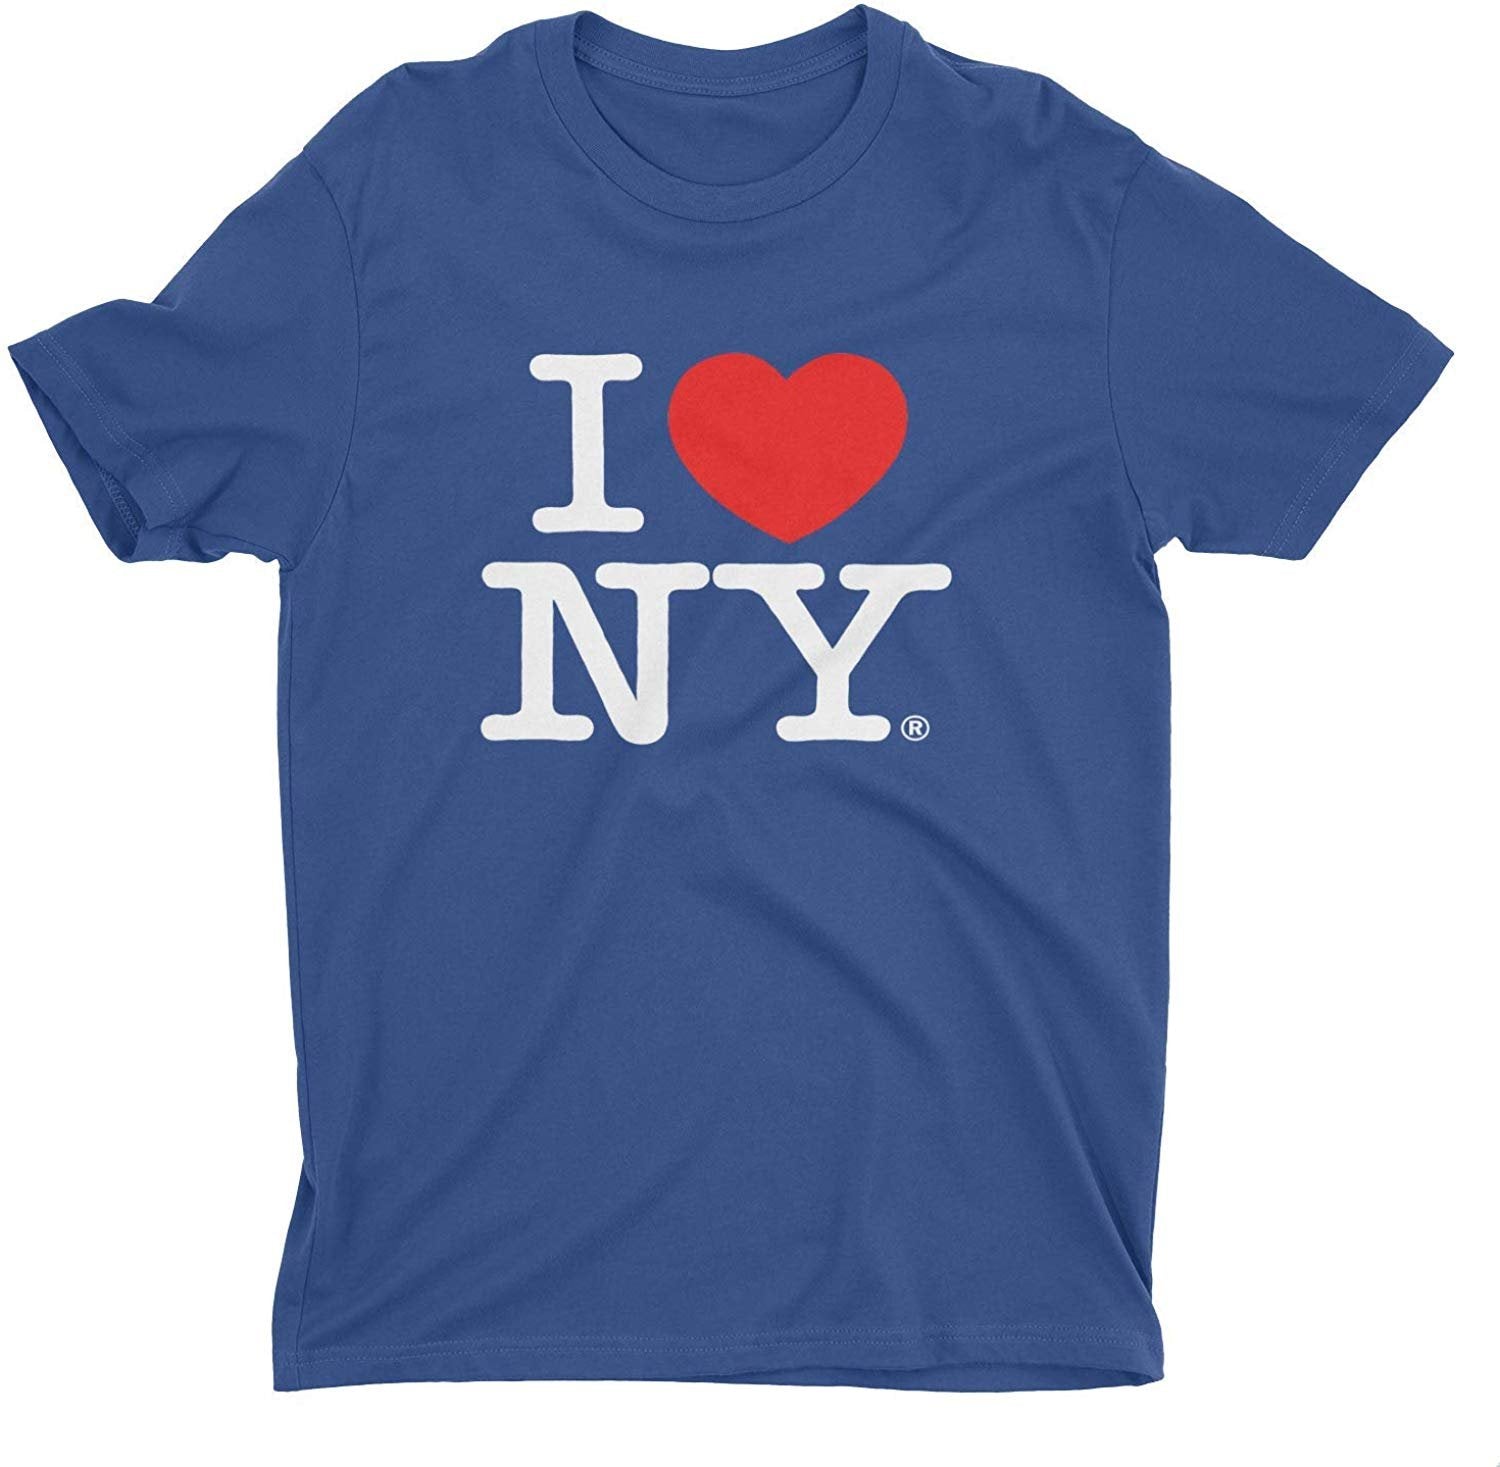 T-shirt Enfant I Love NY Bleu marine